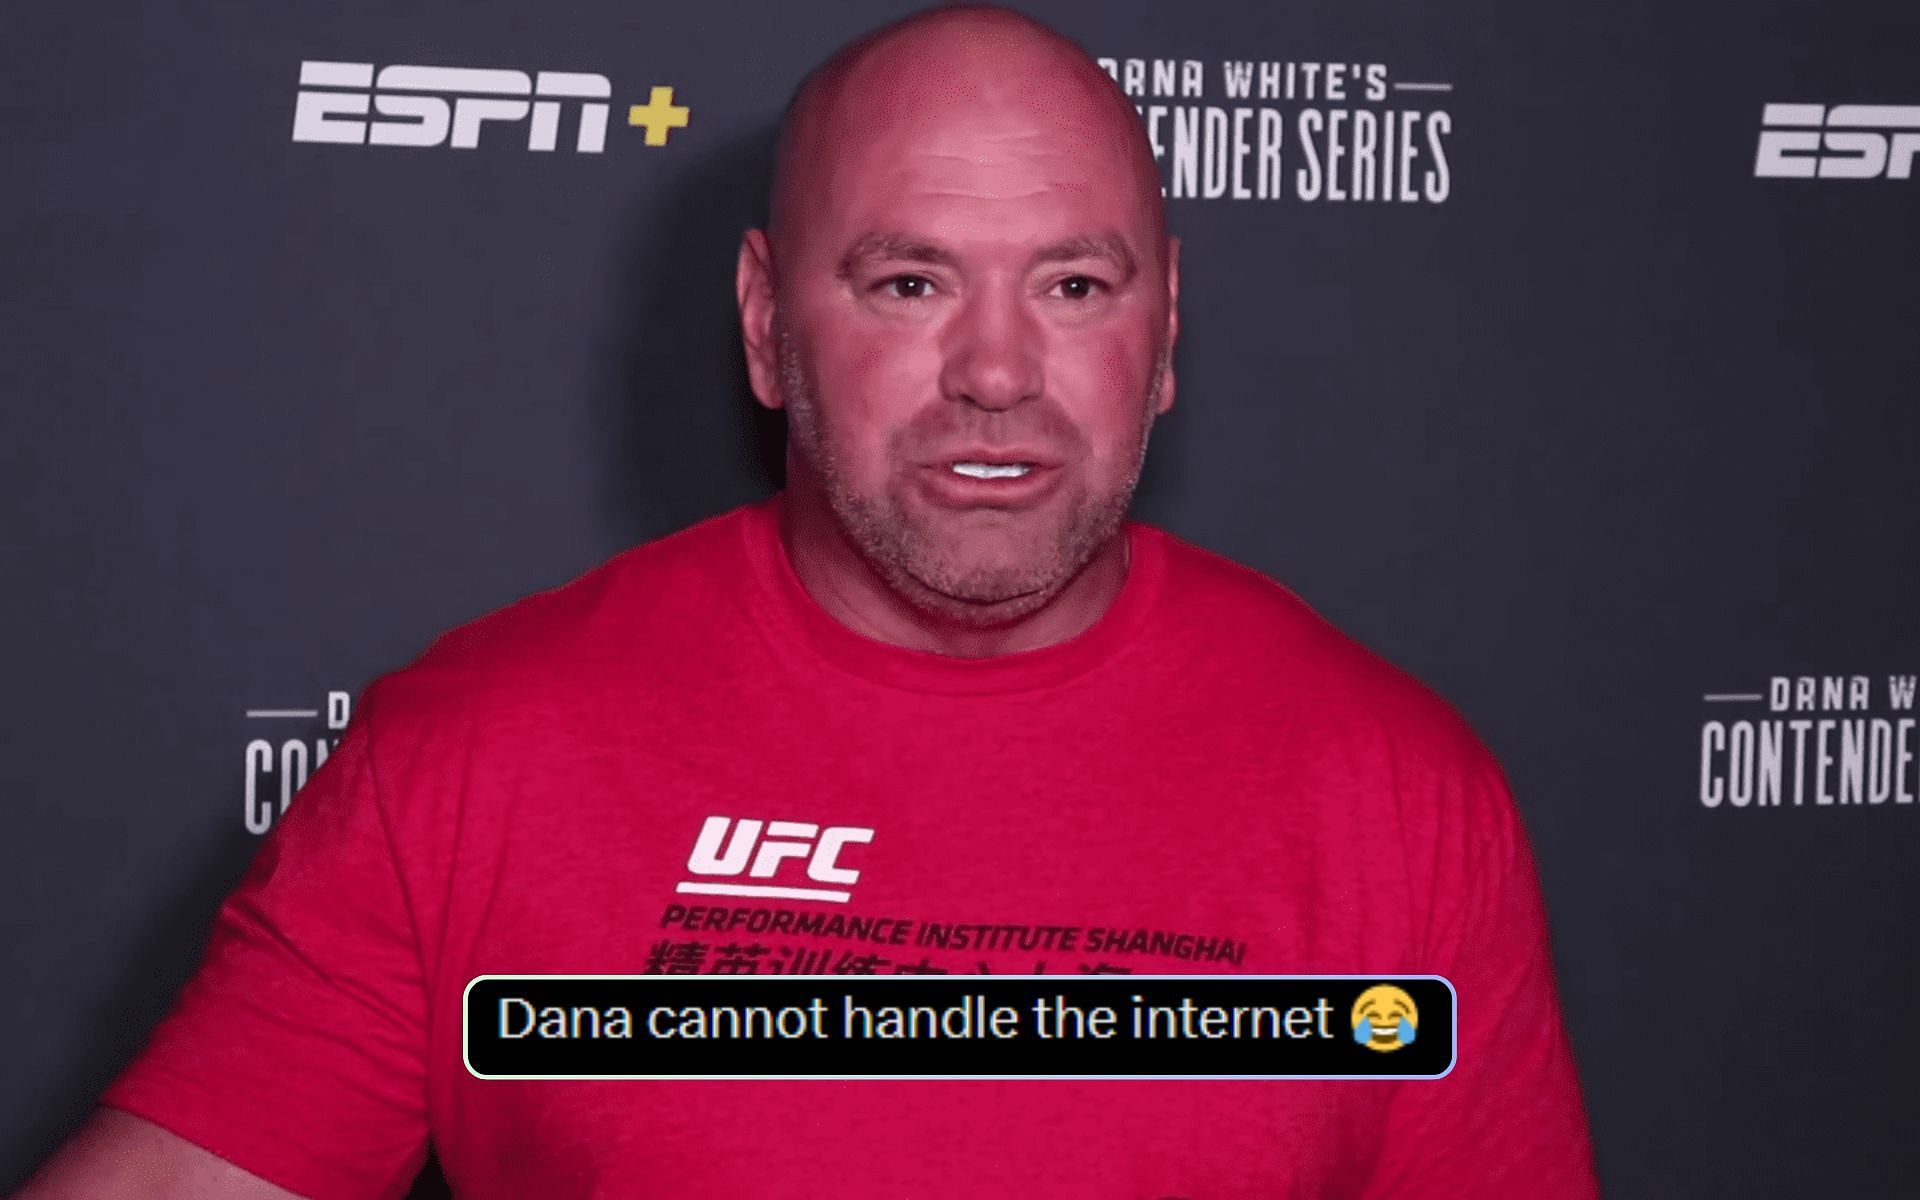 UFC CEO Dana White got trolled on Instagram live